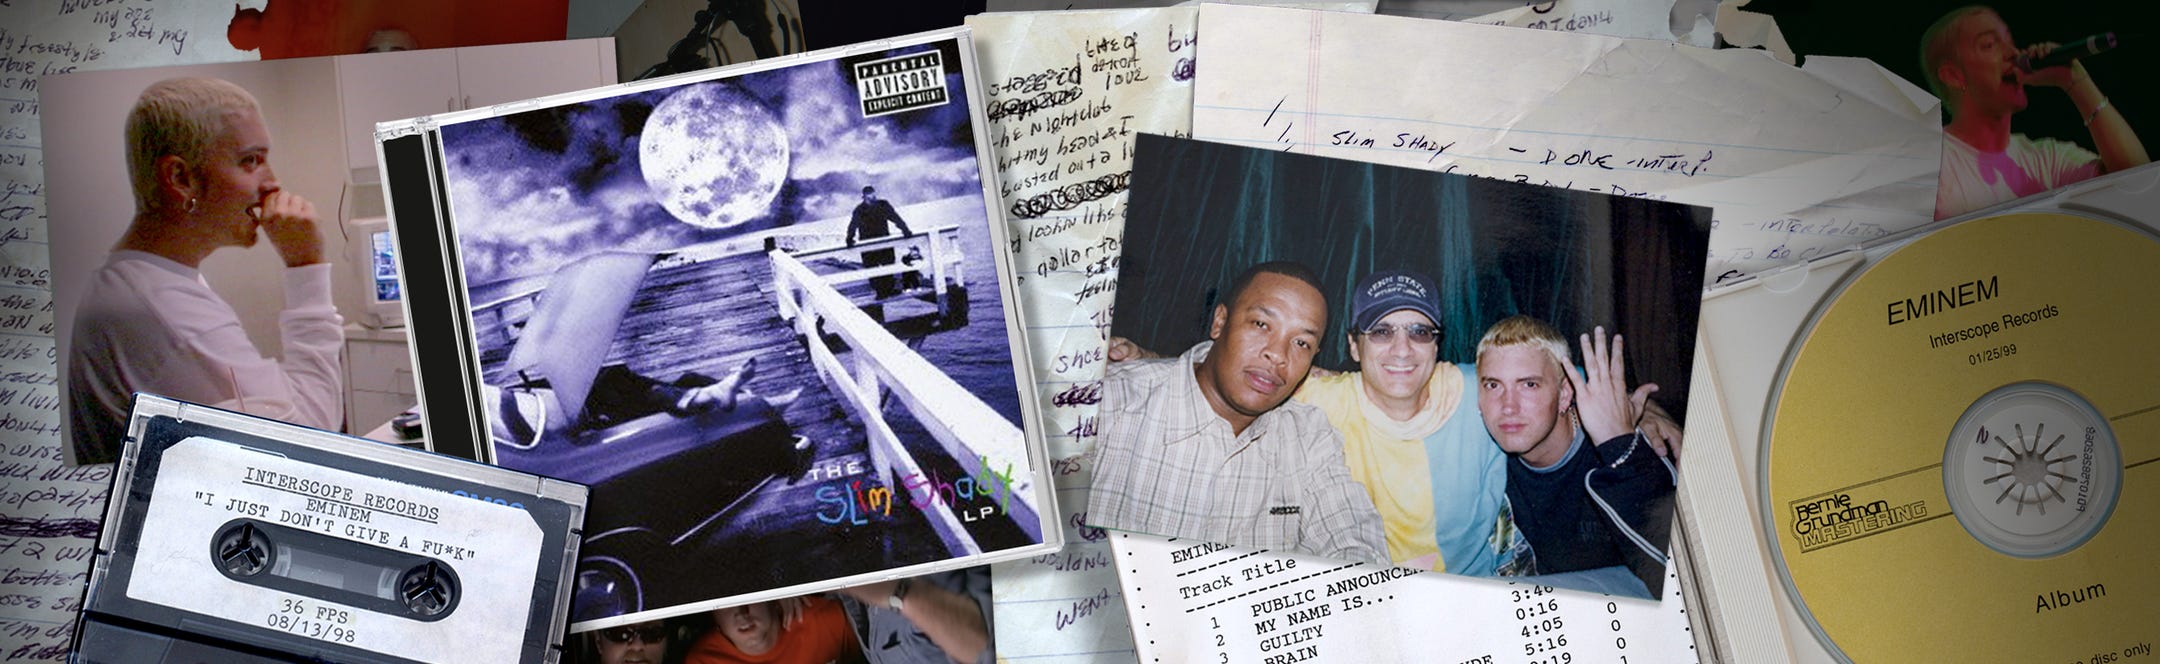 D12 - D12 World 2LP Vinyl Hip Hop Eminem